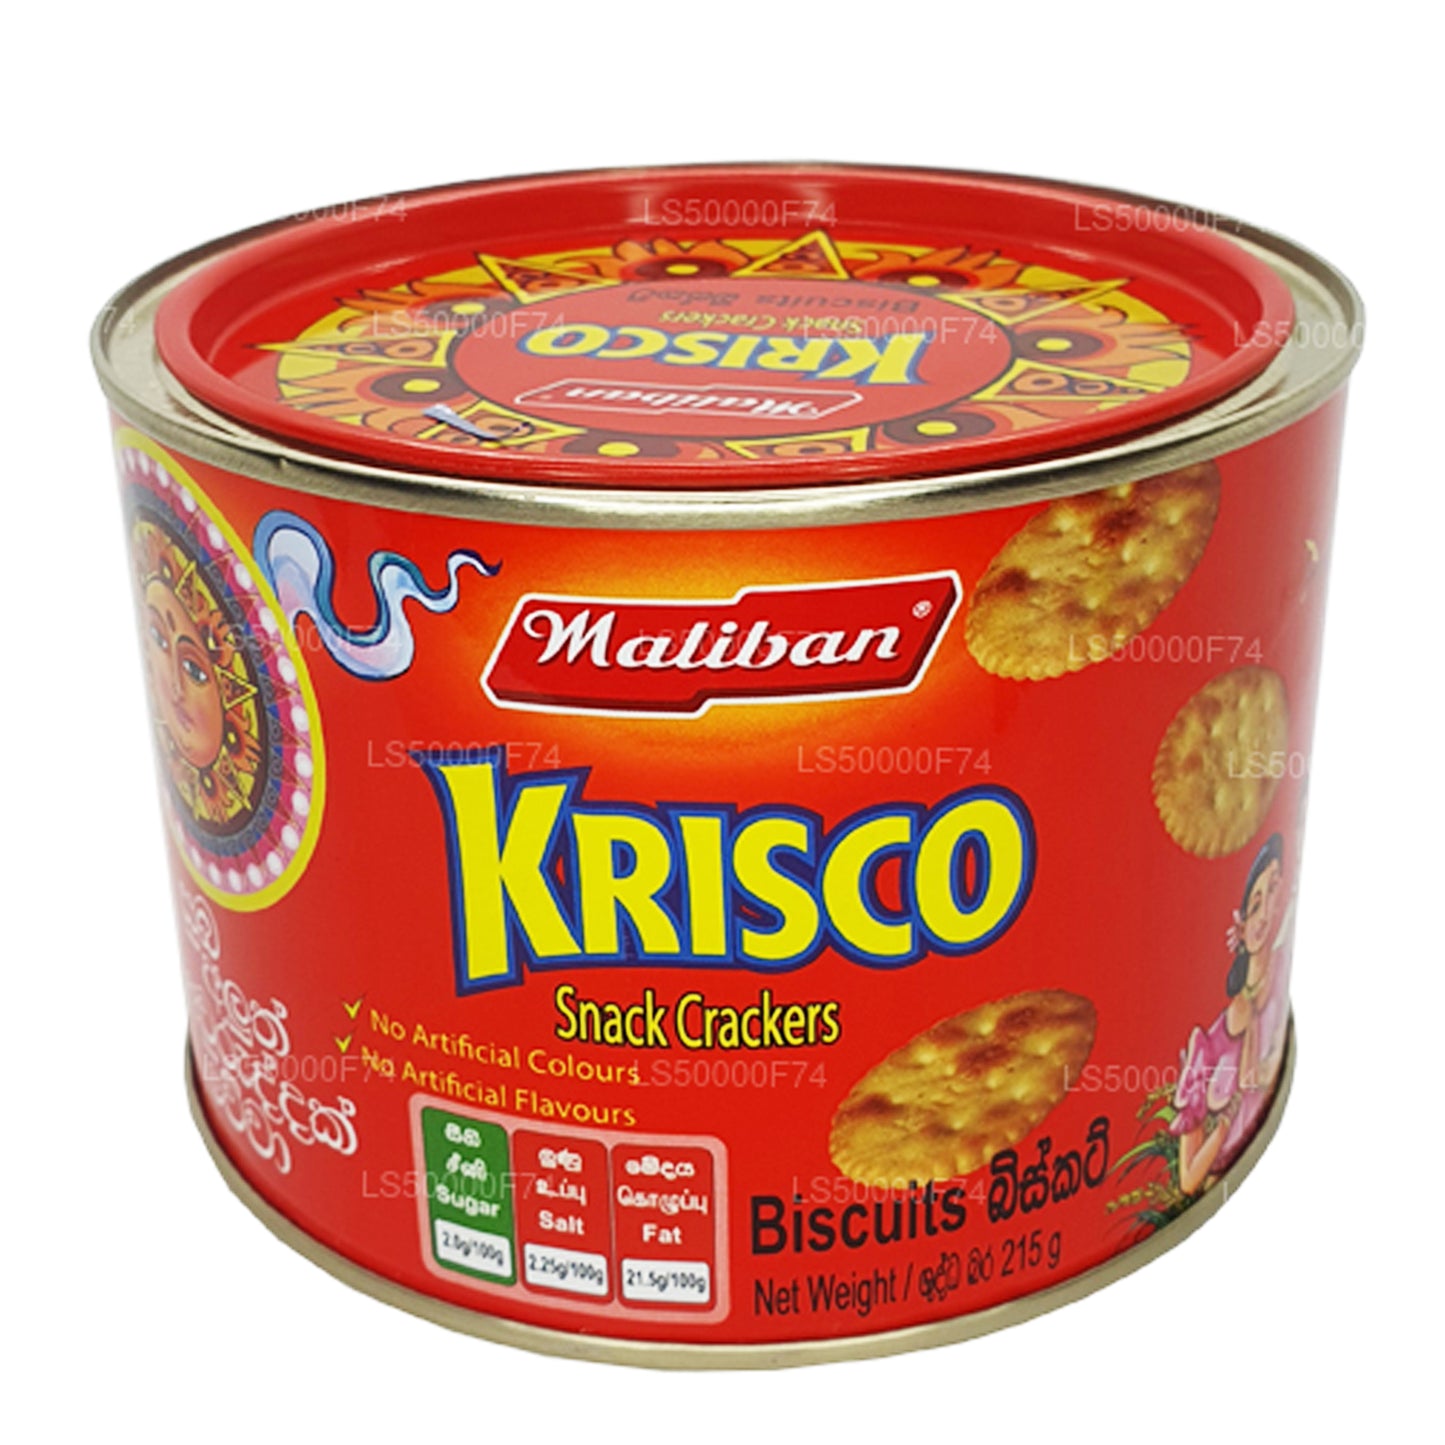 Maliban Krisco Snack Crackers Biscuits (215g)